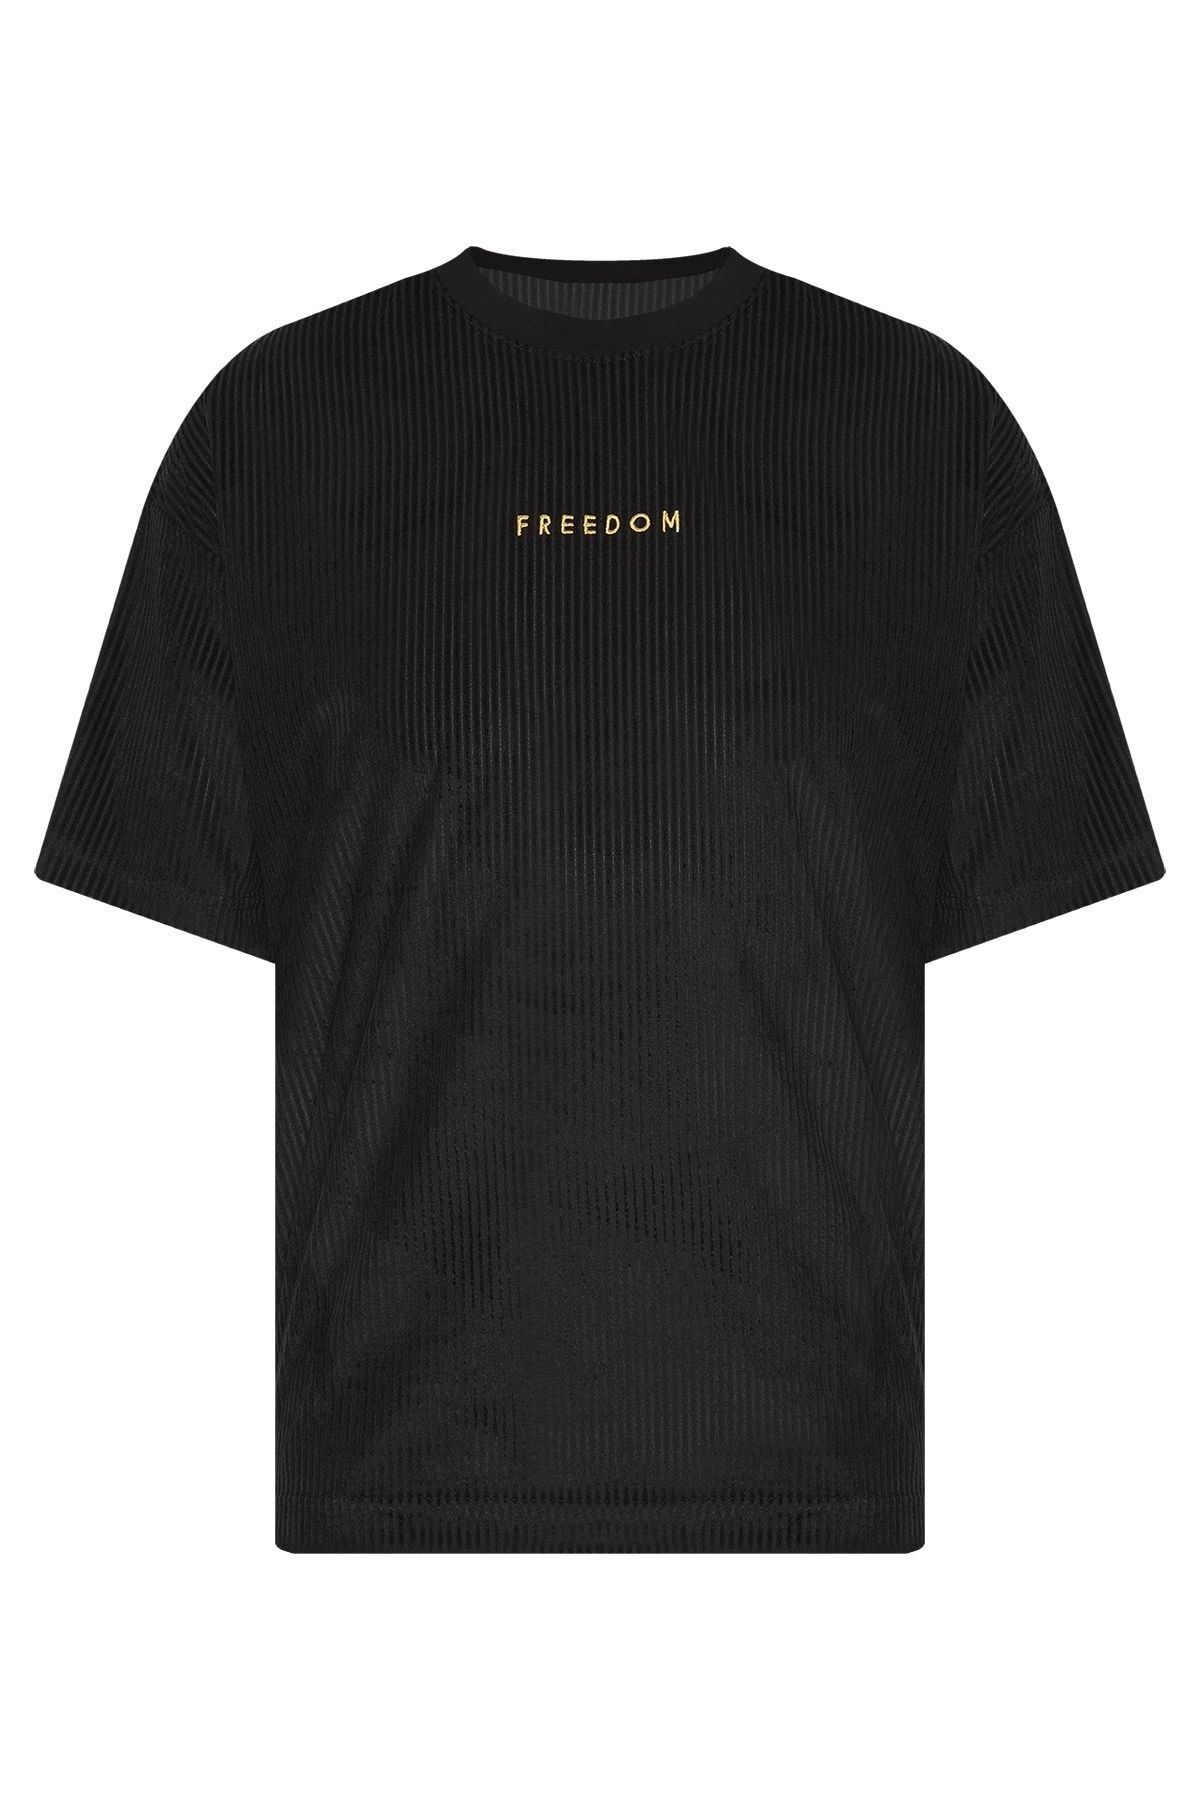 XHAN Siyah Freedom Nakışlı Fitilli Oversize T-shirt 2yxe2-45986-02